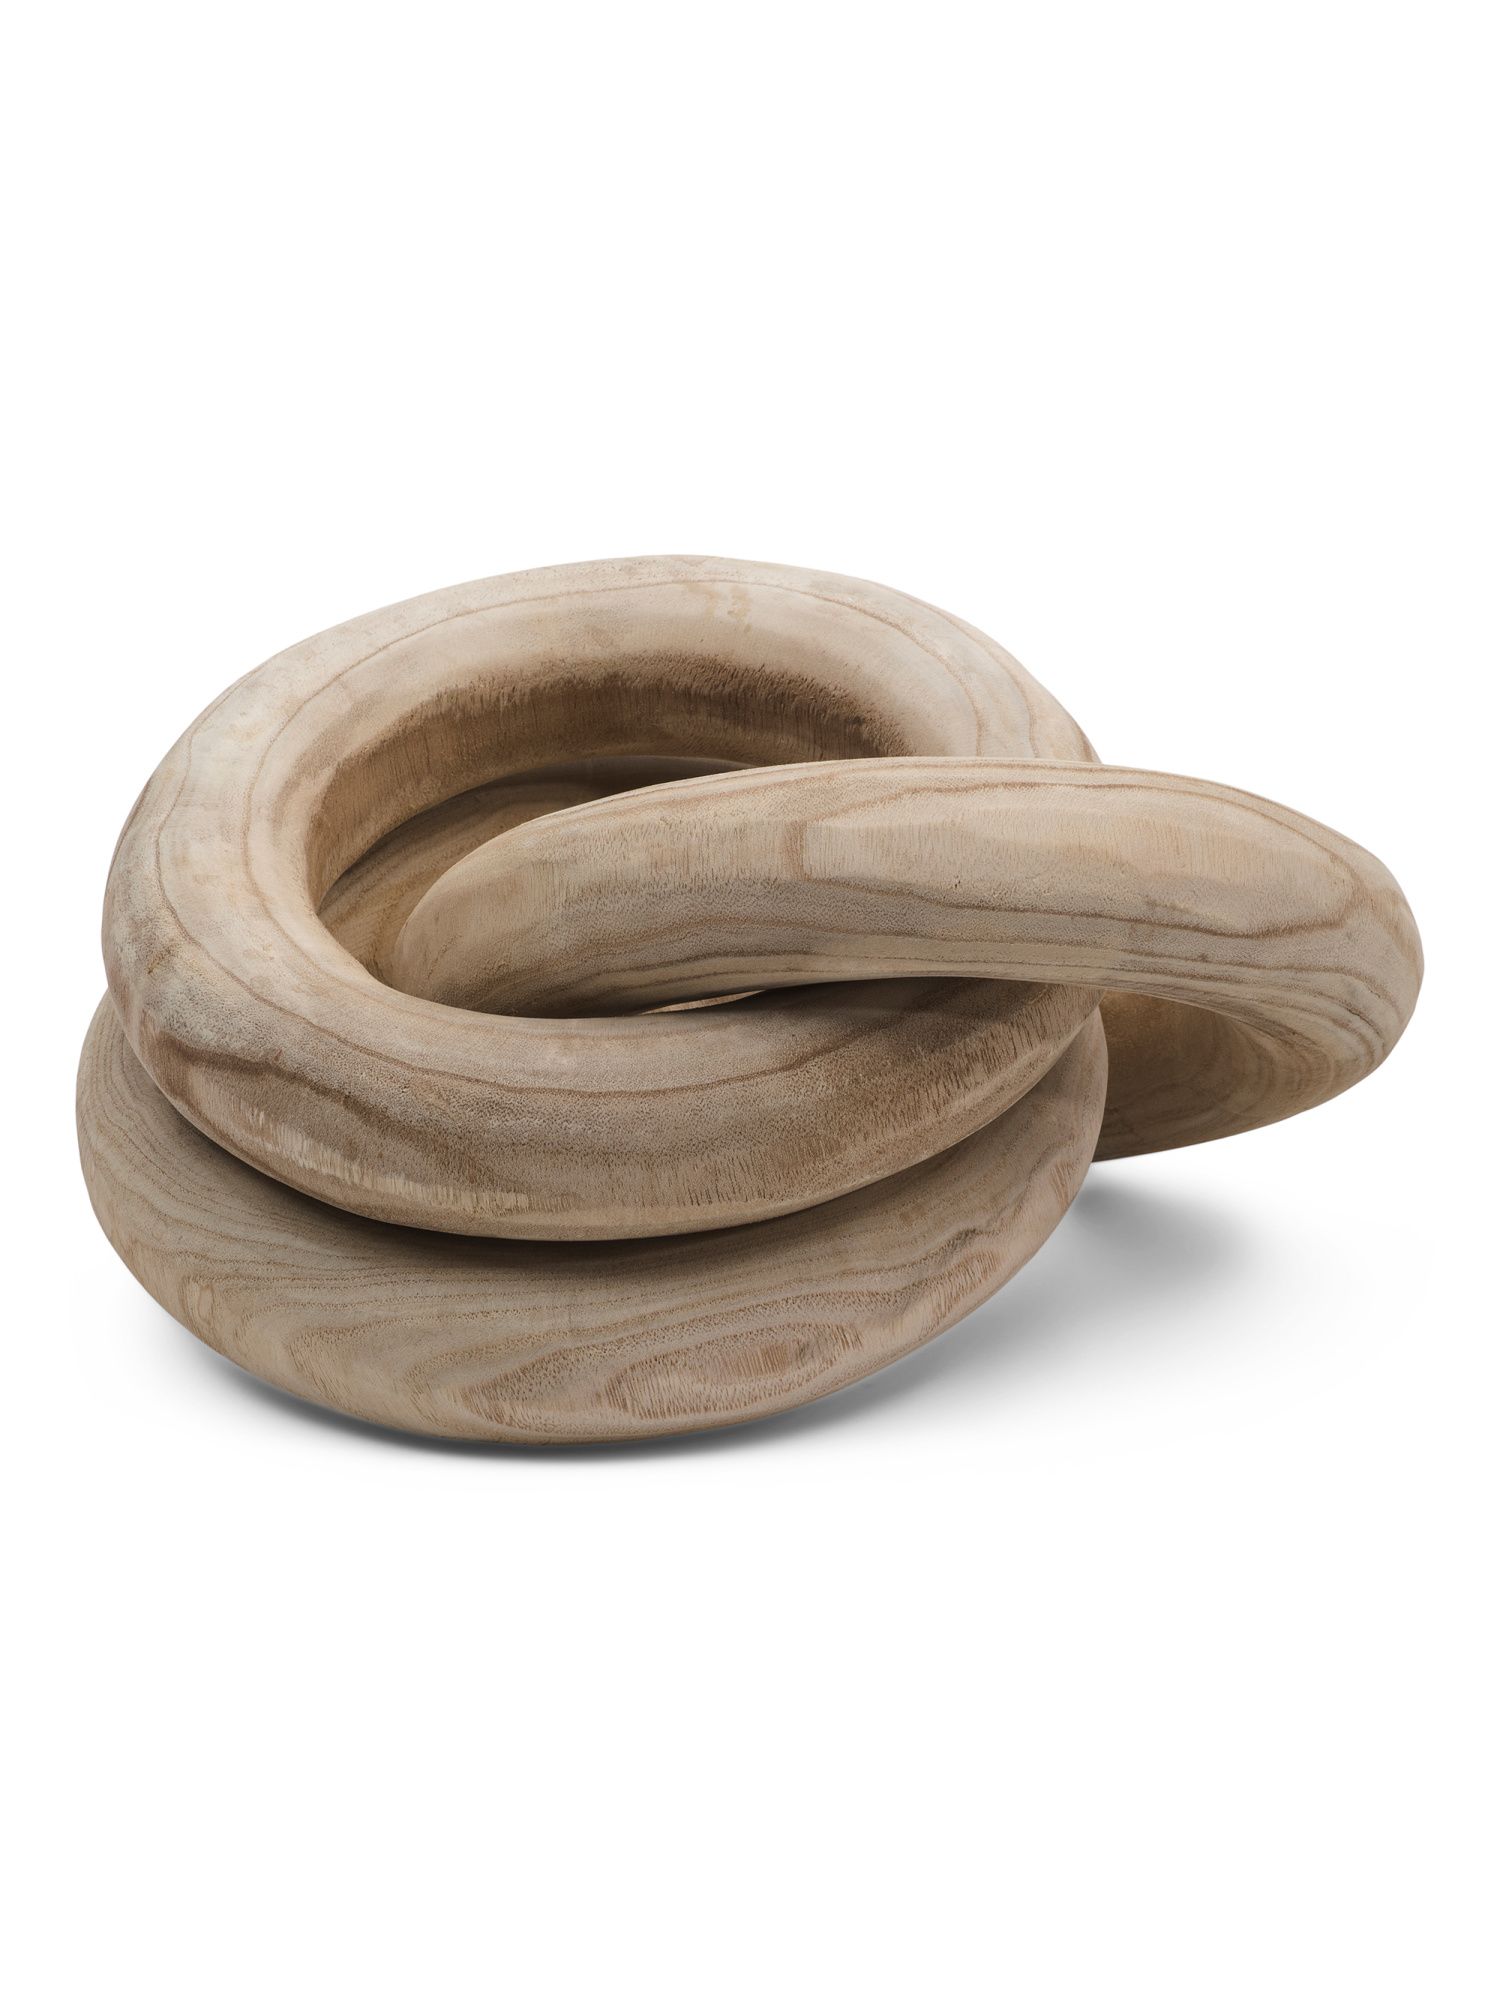 3 Wooden Rings | TJ Maxx